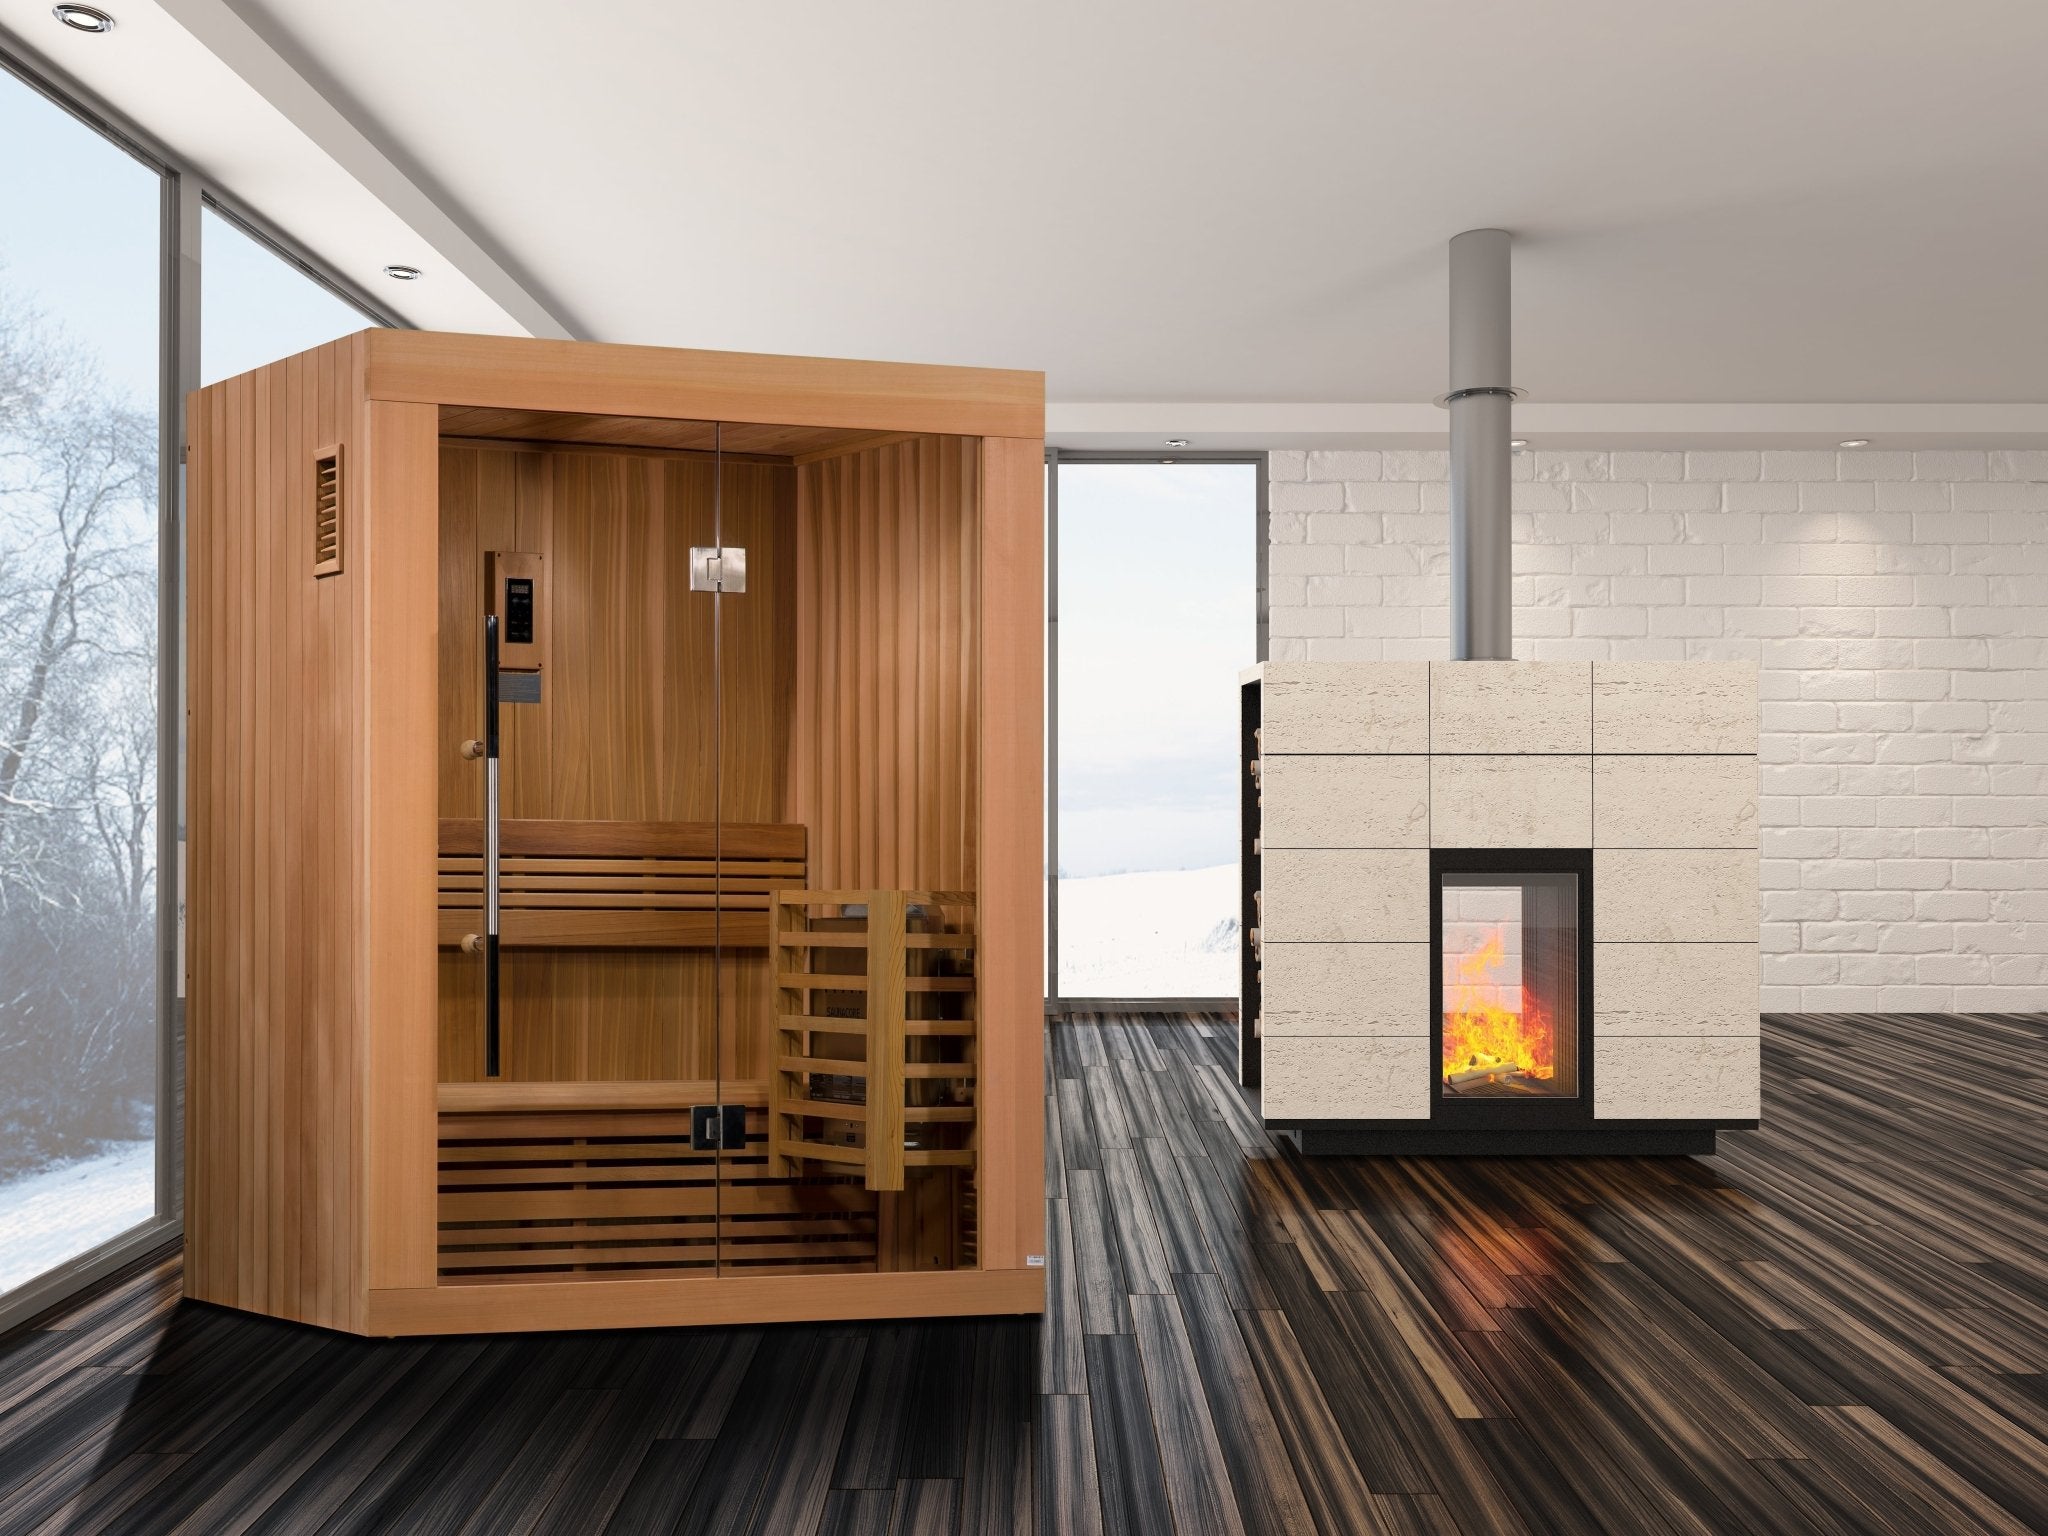 Golden Designs "Sundsvall Edition" 2 Person Traditional Steam Sauna - Canadian Red Cedar - The Sauna World